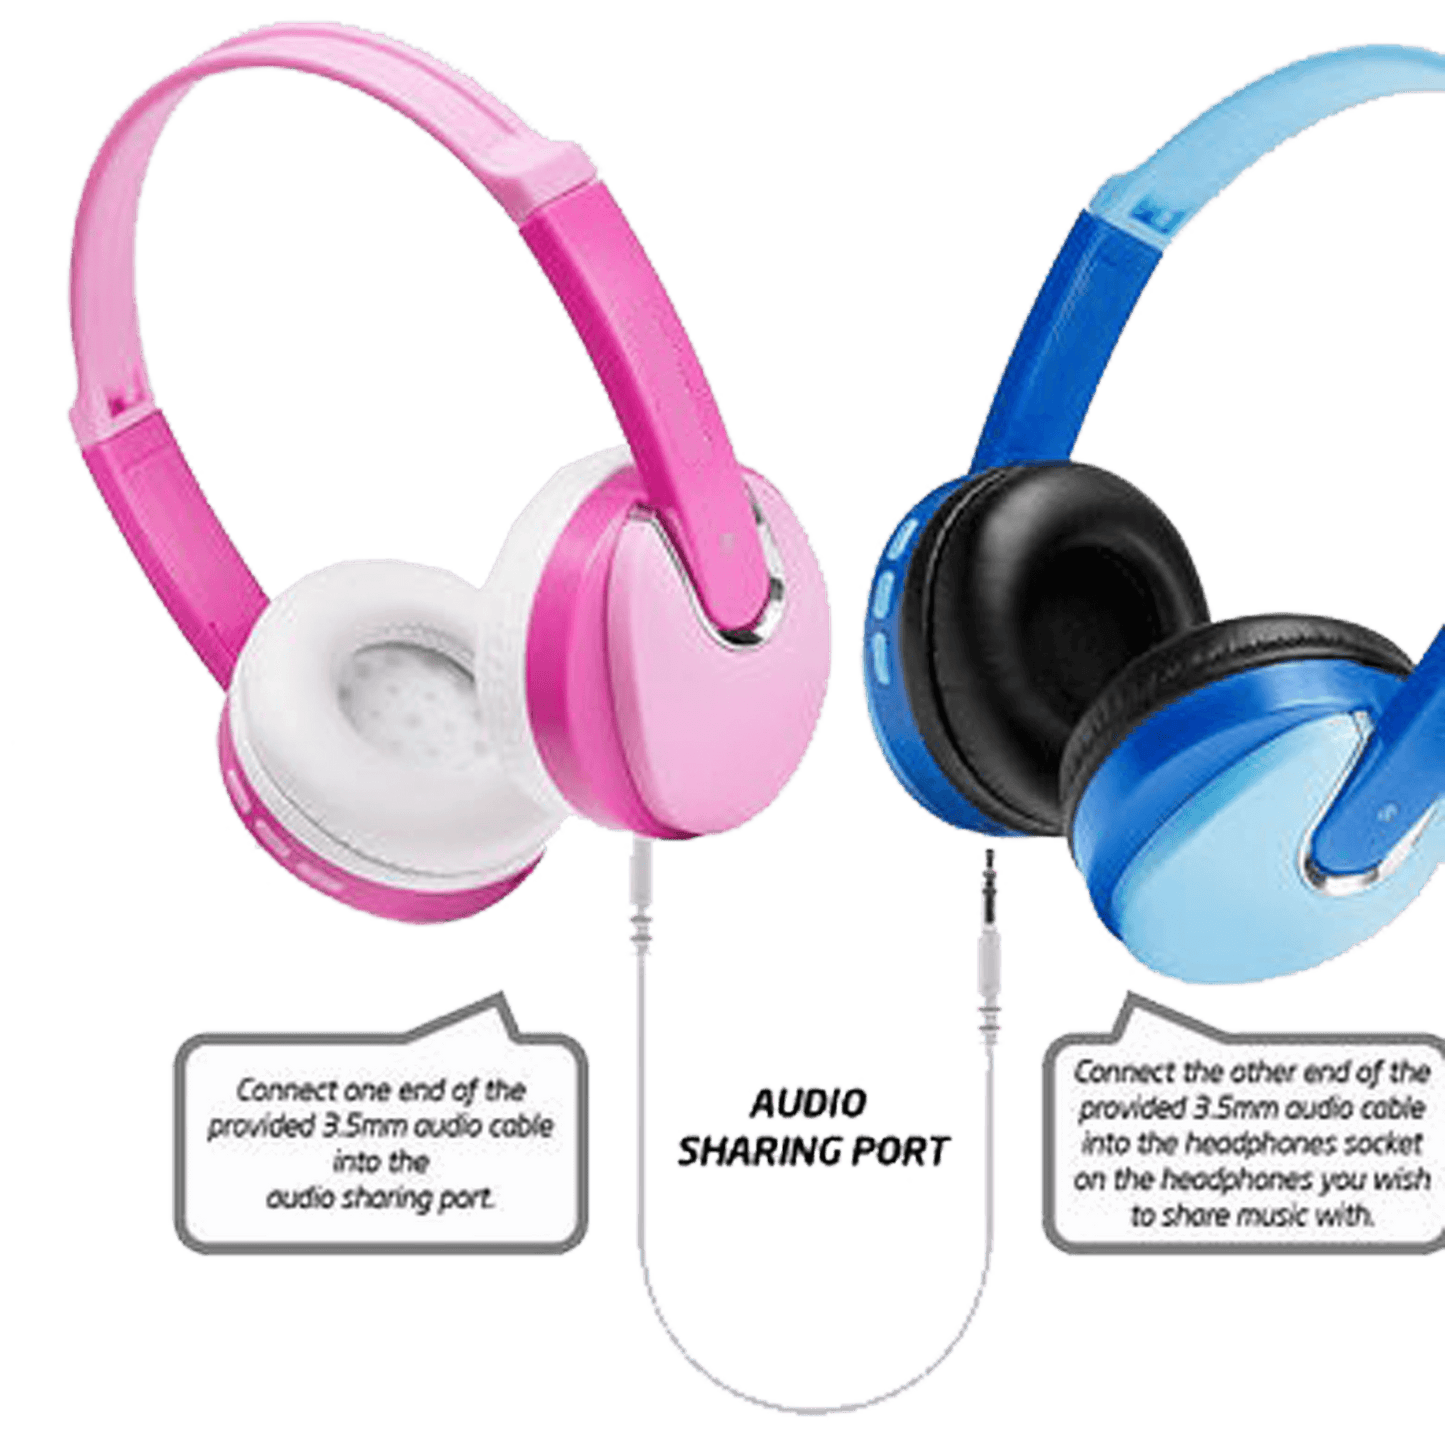 wireless headphones showing how audio sharing port works